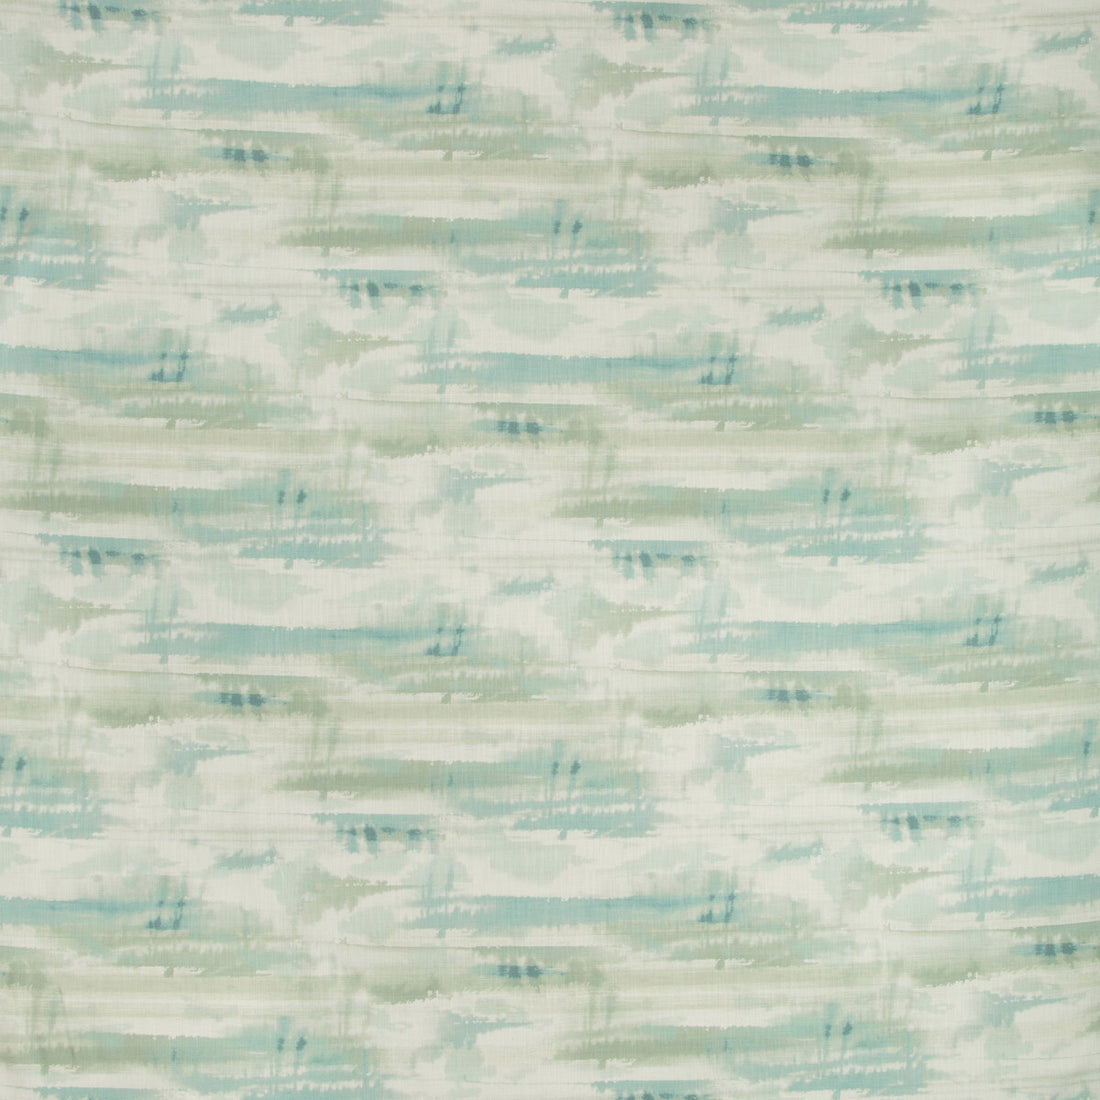 Kravet Basics fabric in piebald-13 color - pattern PIEBALD.13.0 - by Kravet Basics